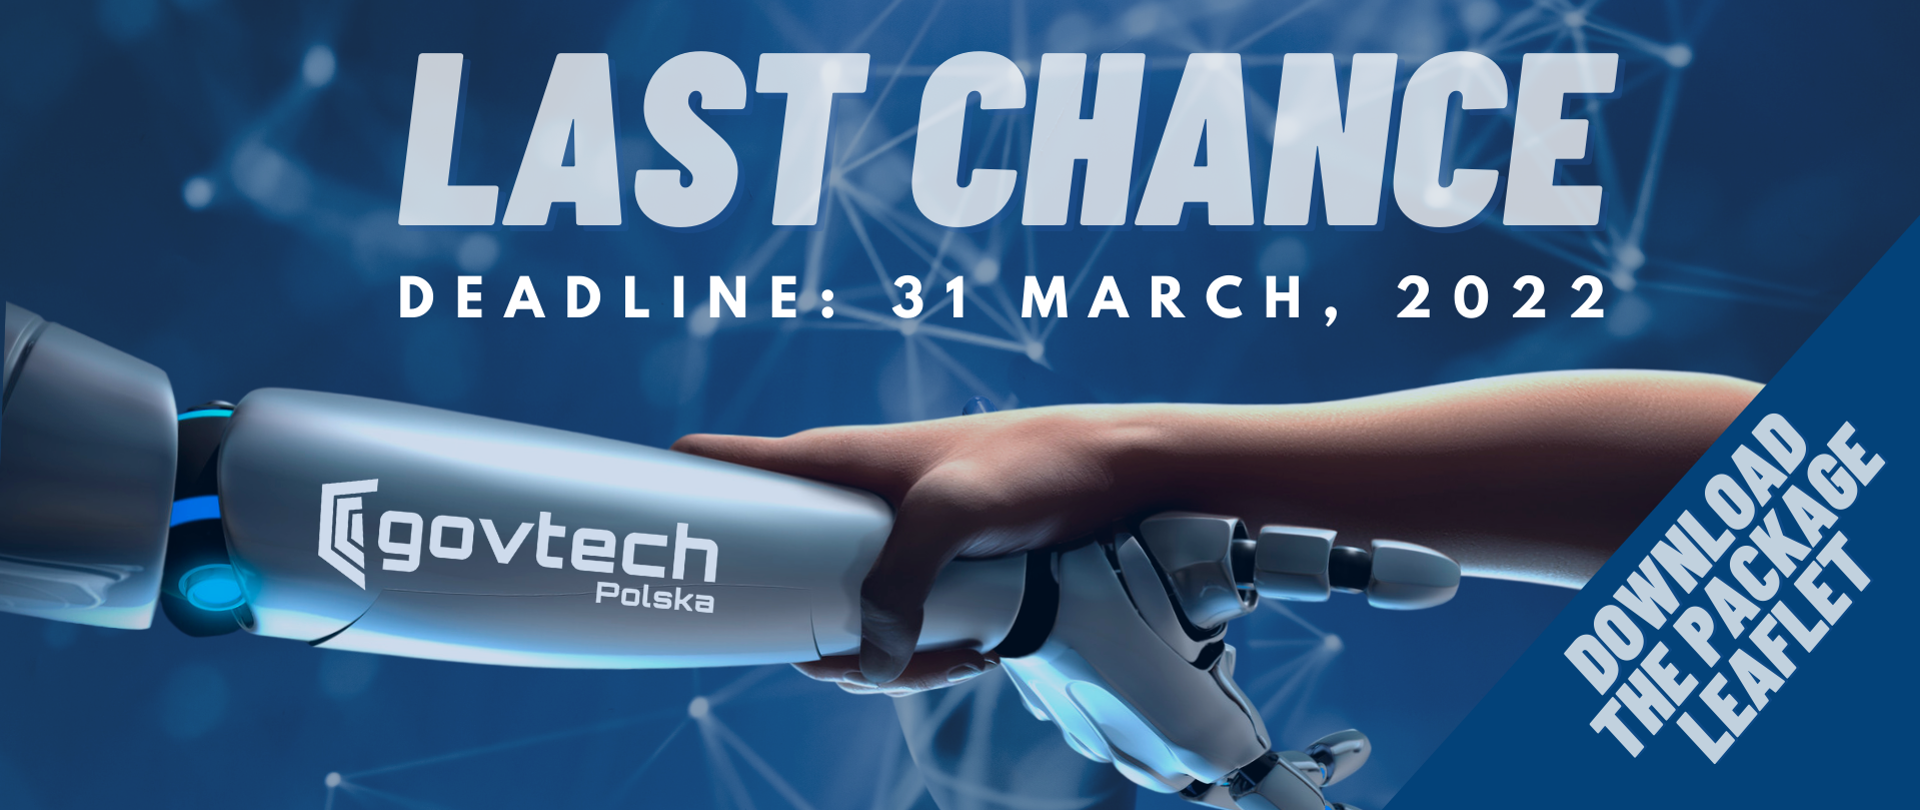 Last Chance, Deadline: 31 March 2022. GovTech Poland. Download The package leaflet!